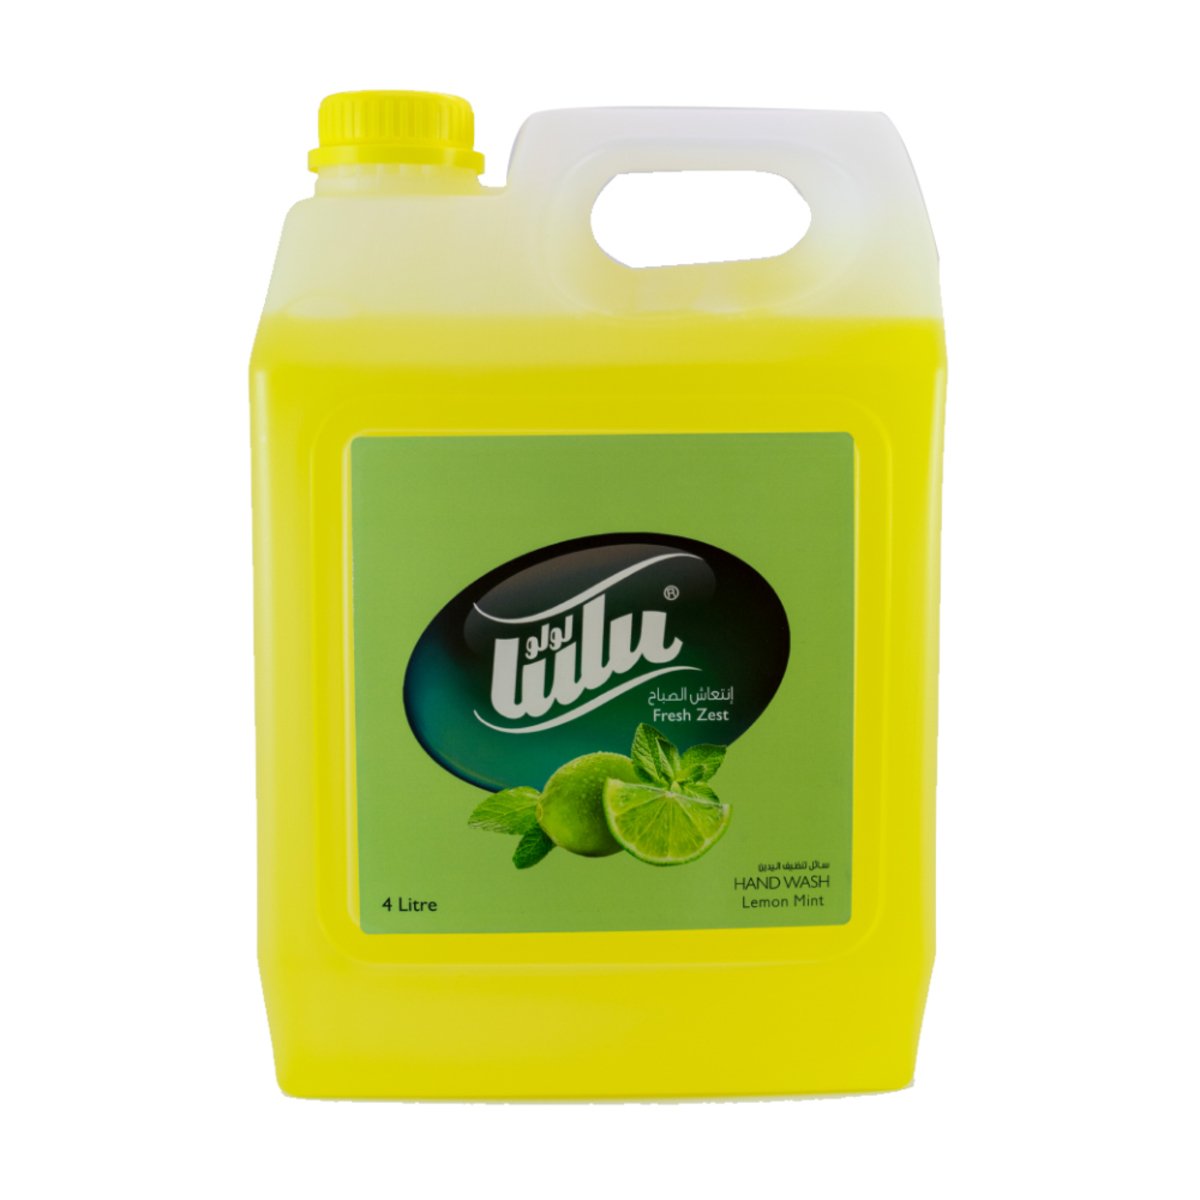 LuLu Hand Wash Lemon Mint 4Litre